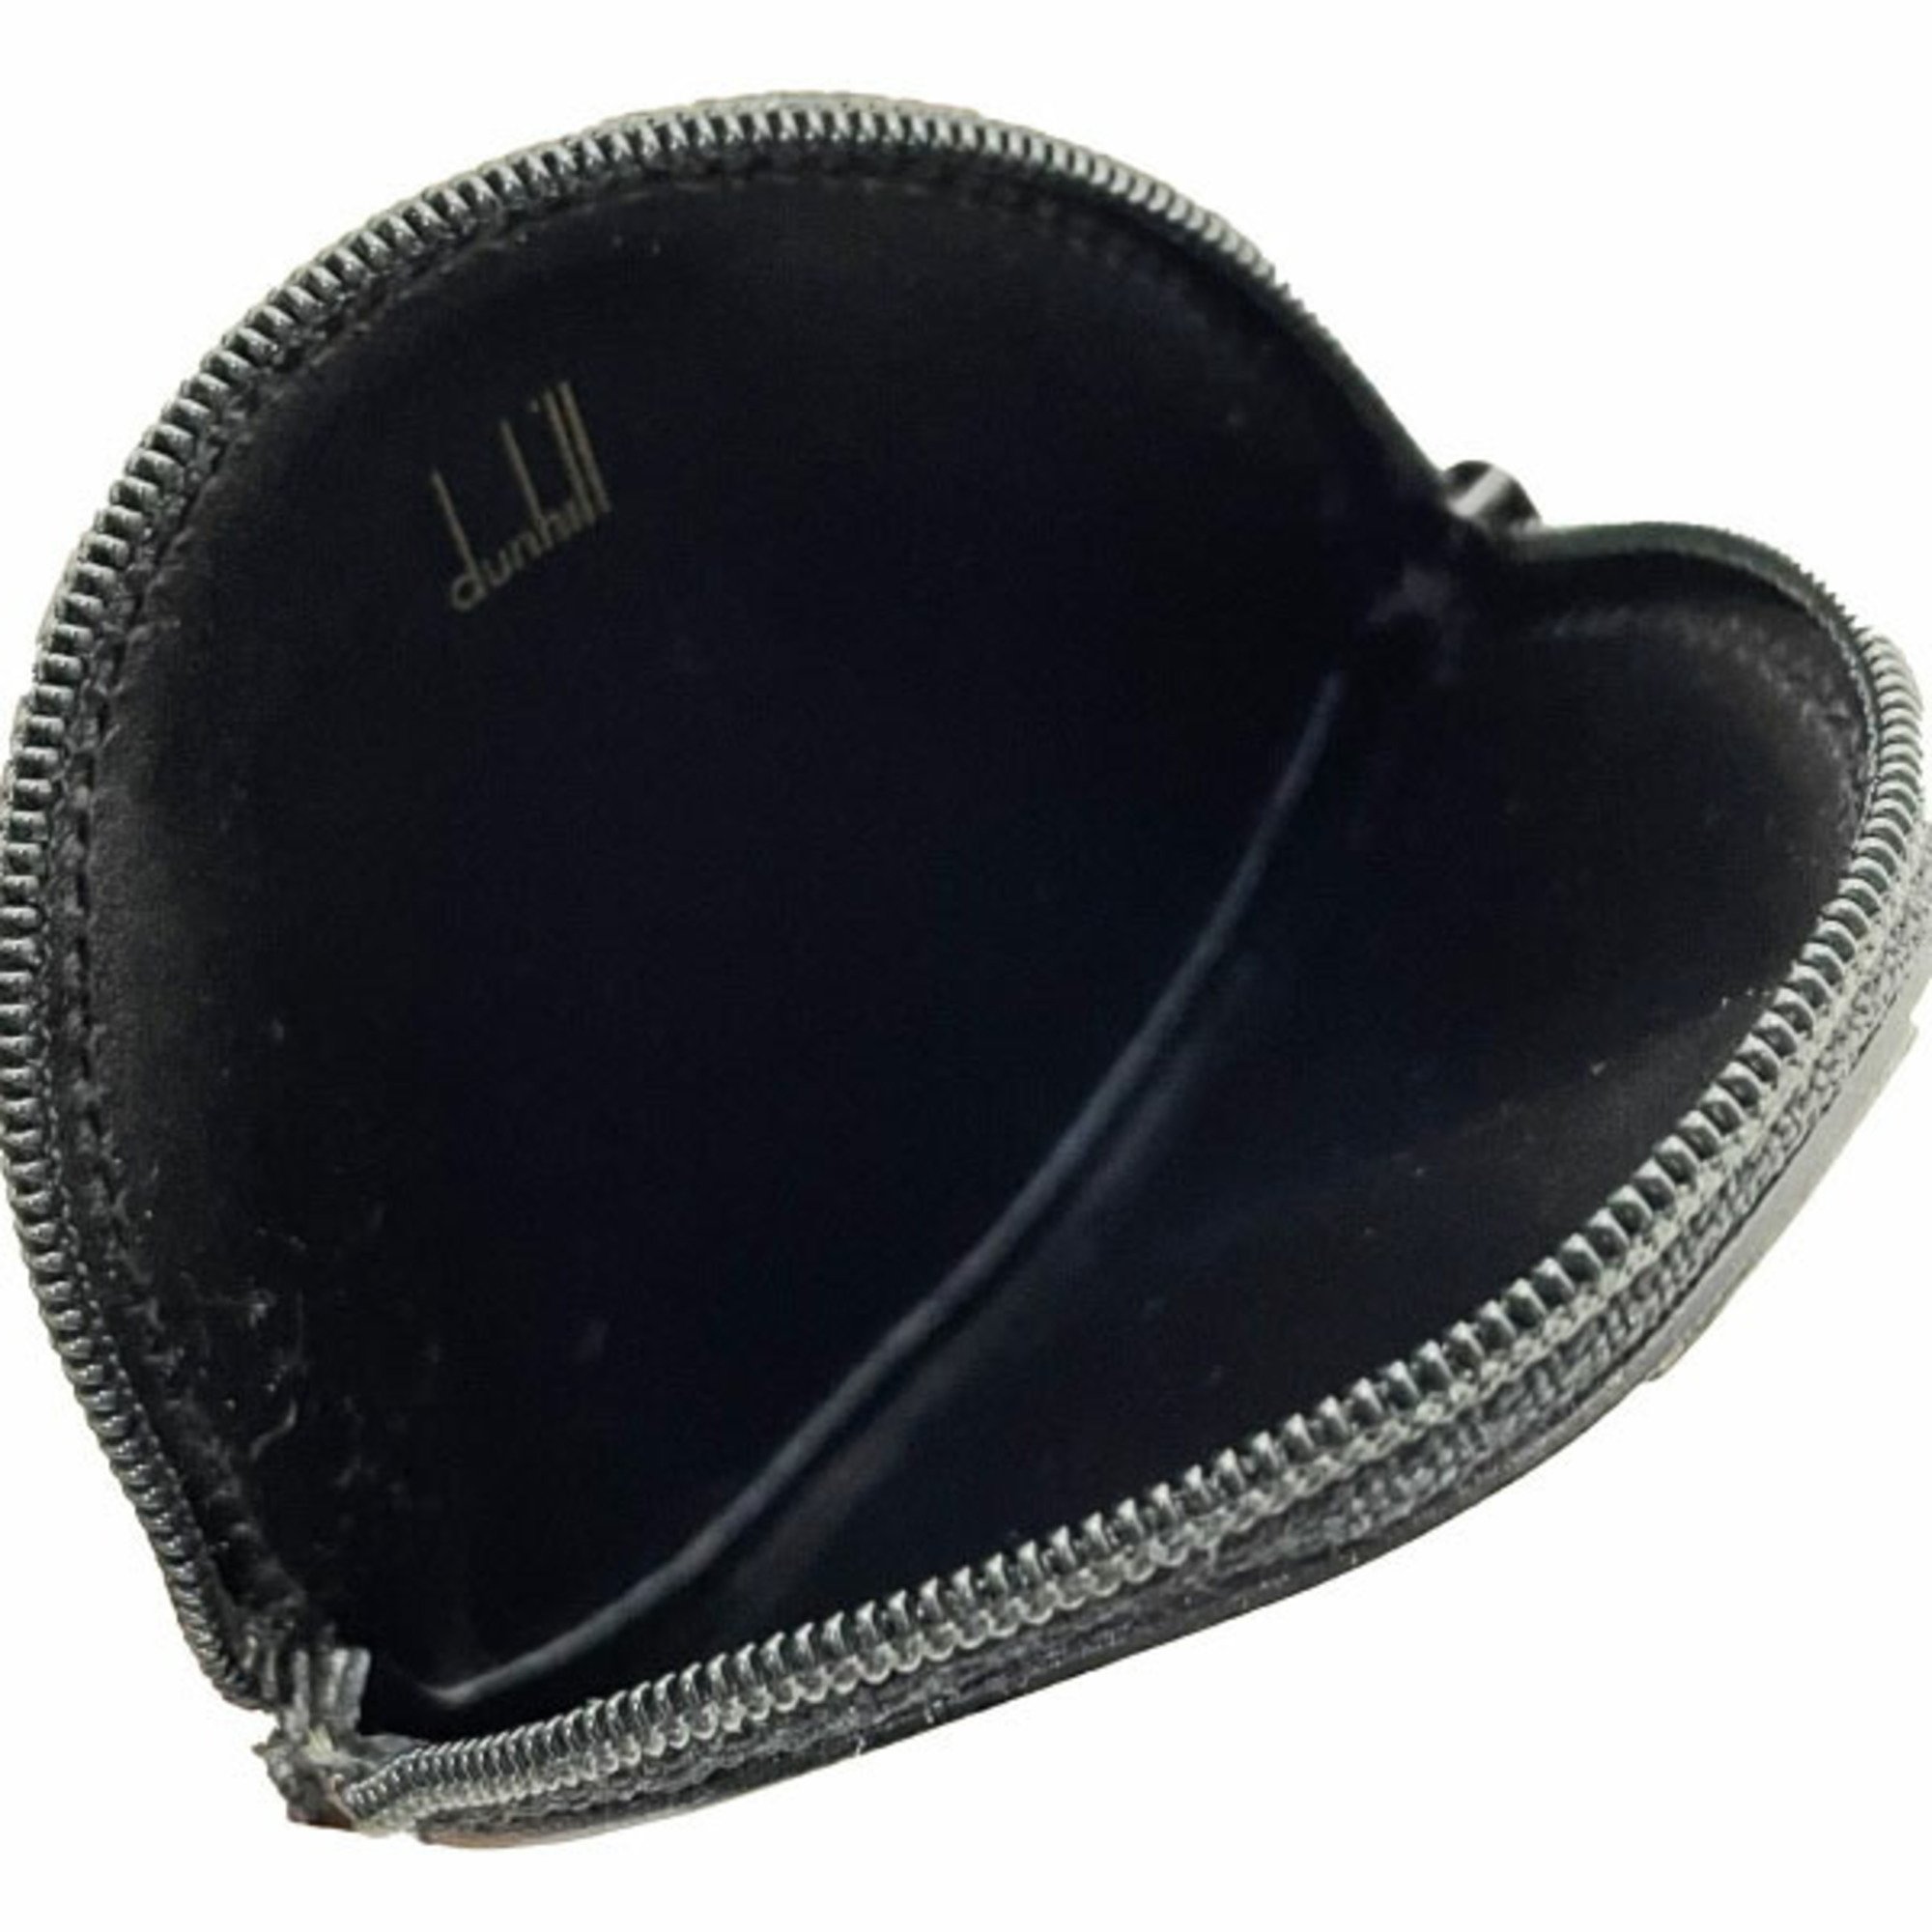 Dunhill coin case leather black dunhill round purse wallet men's KK-12620